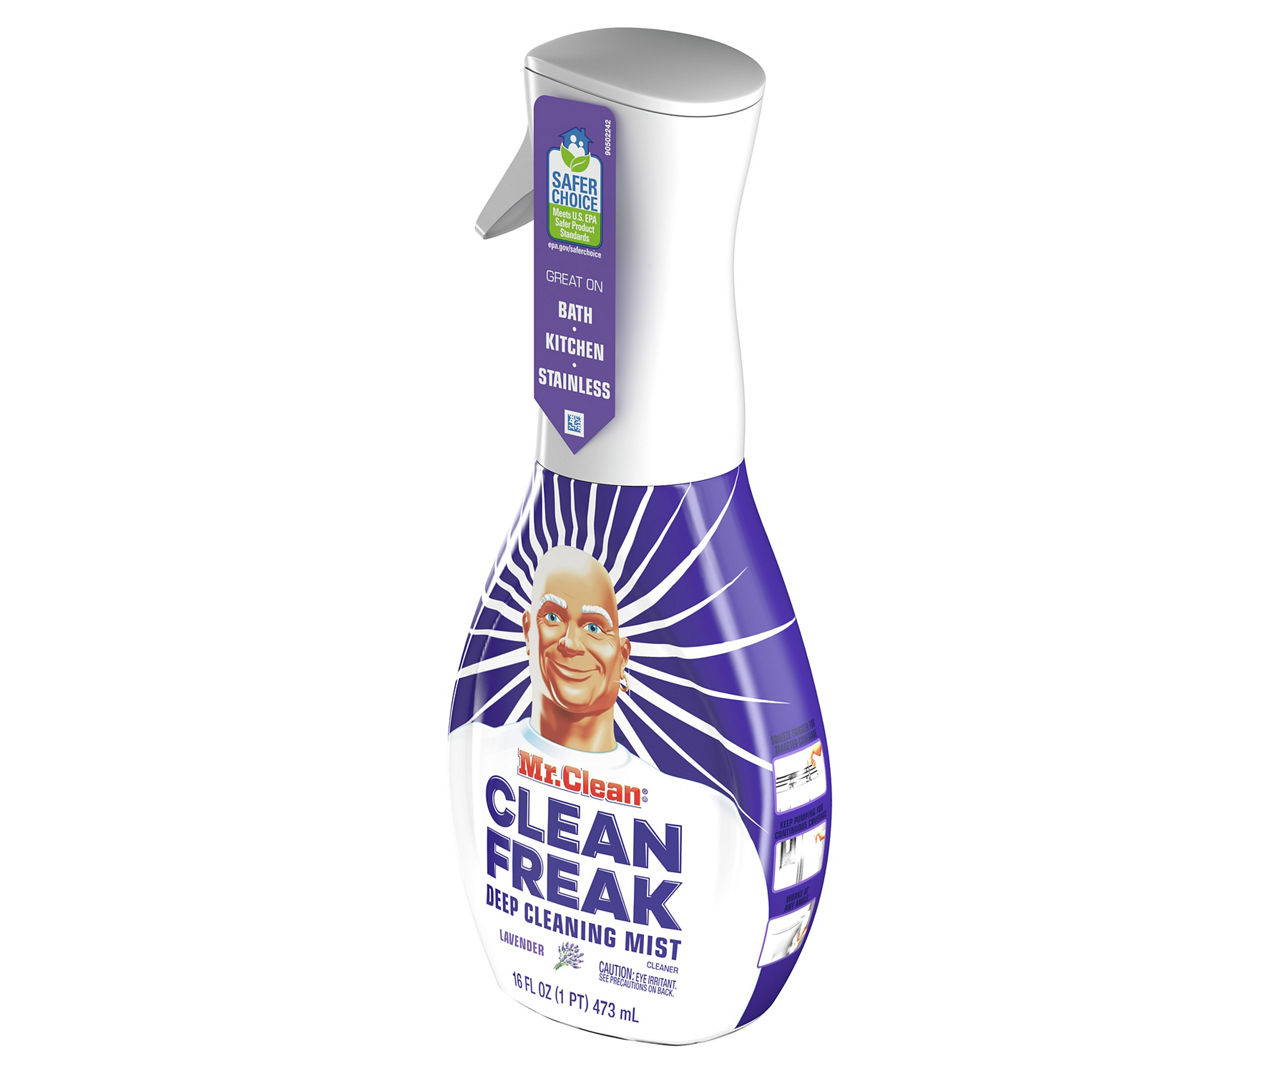 Mr. Clean Clean Freak Lavender Deep Cleaning Mist Multi-Surface Spray, 16  Oz.